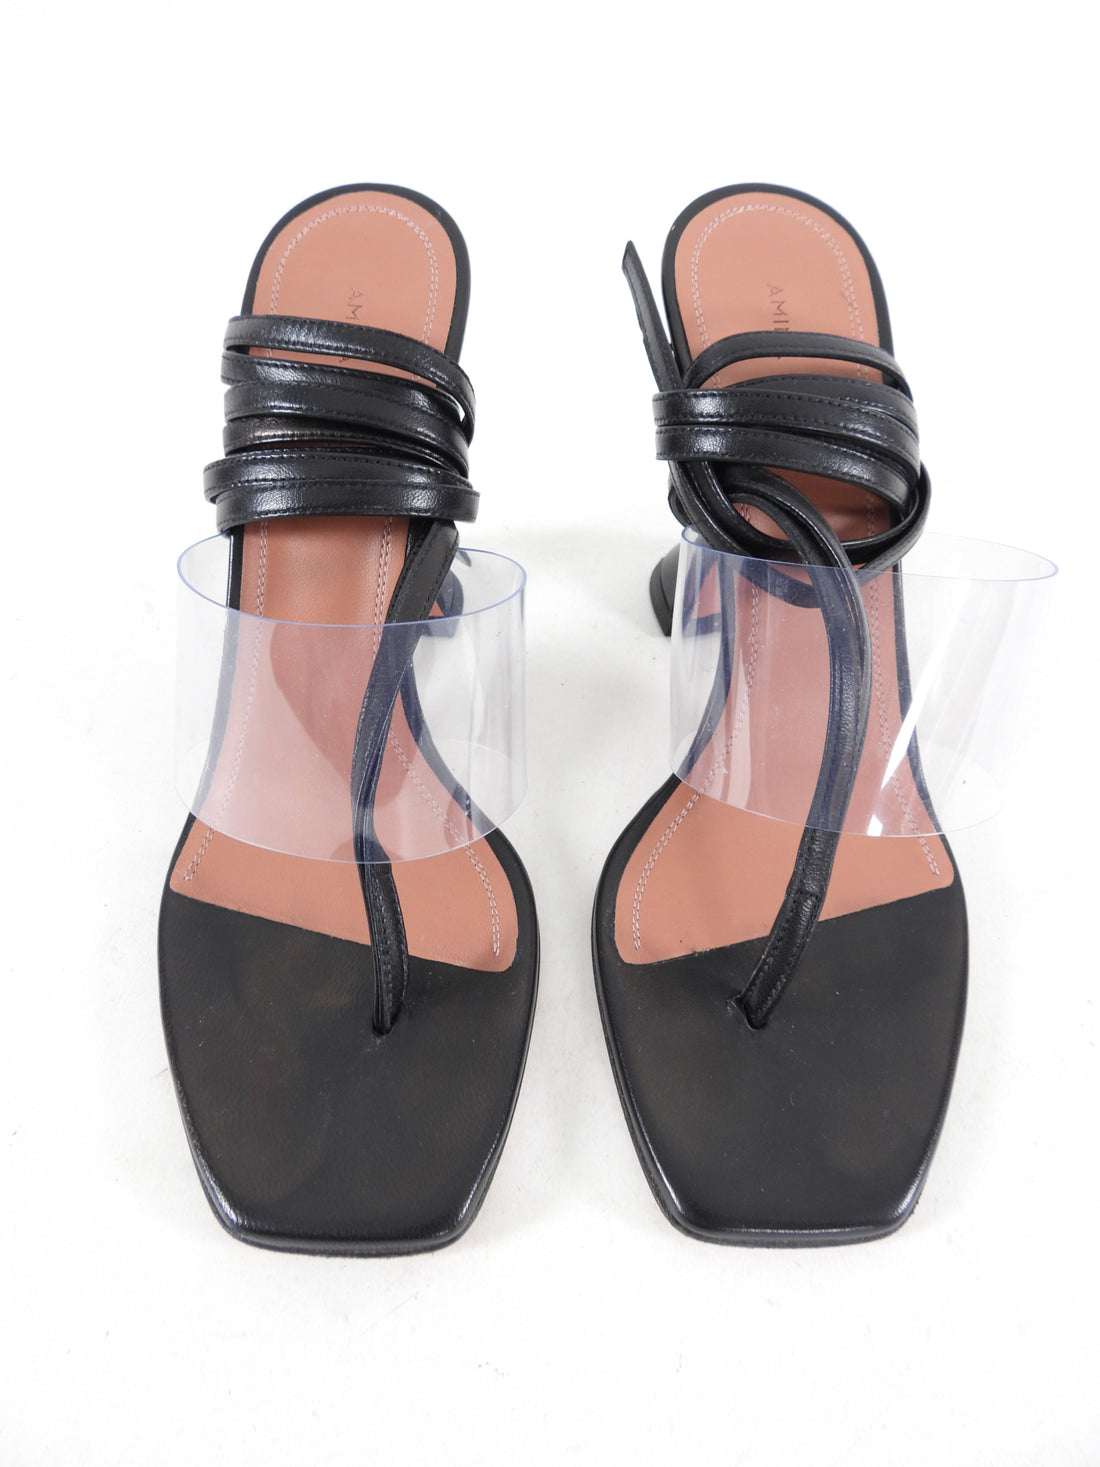 Amina Muaddi Zula Sandal Clear PVC Wrap Around Heels - 37.5